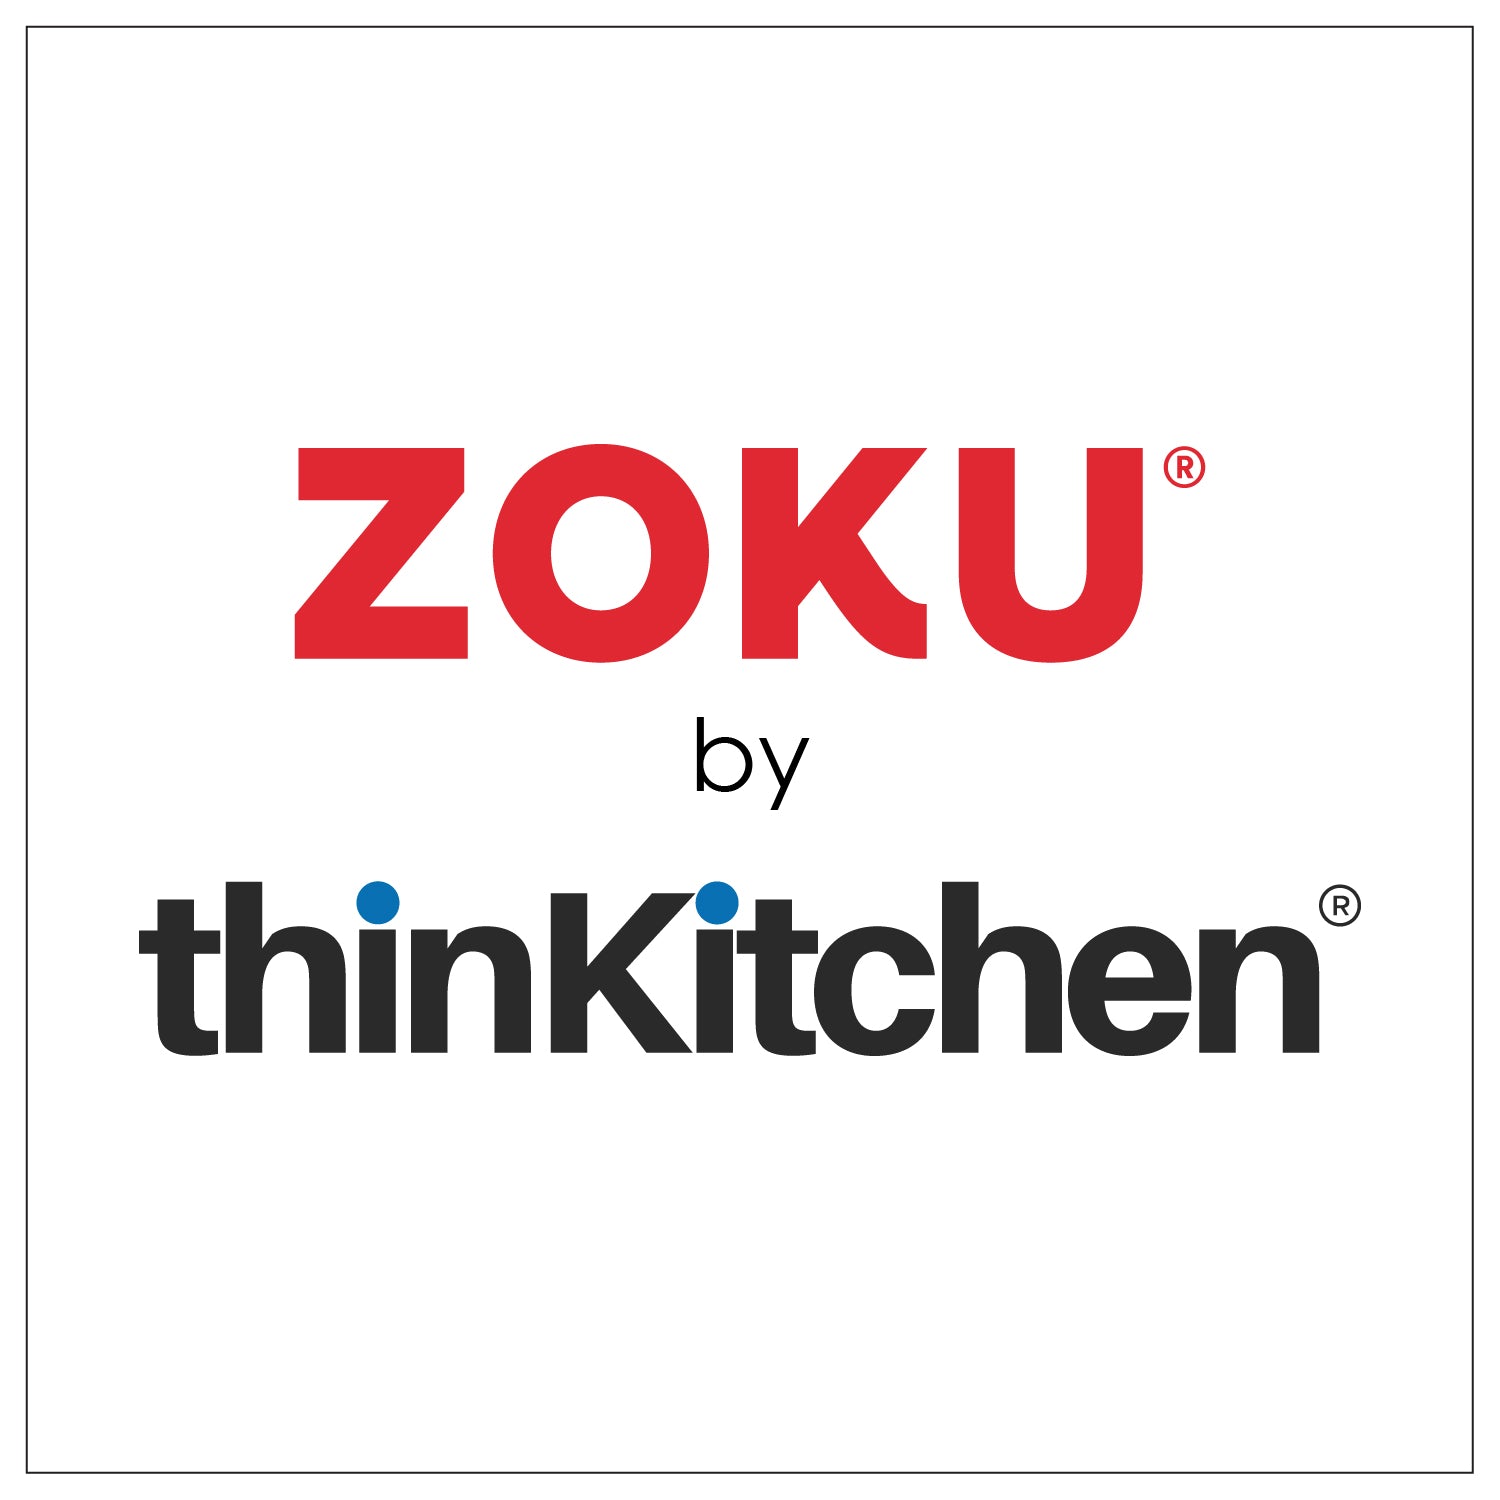 Zoku - Ice Cream Maker, Blue